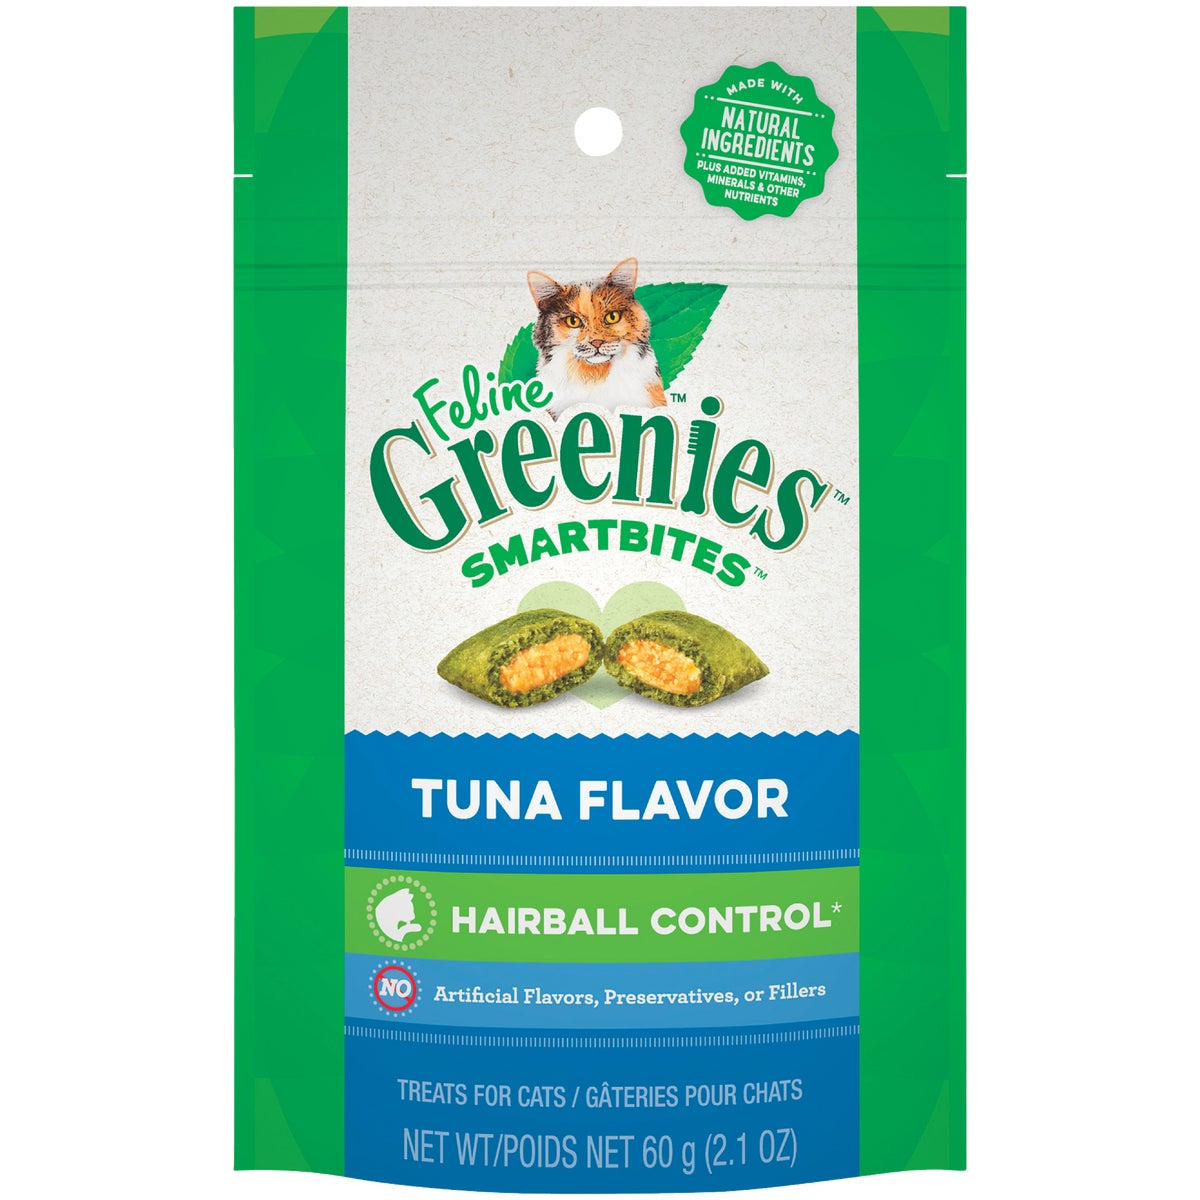 Greenies SmartBites Tuna 2.1 Oz. Hairball Control Cat Treats